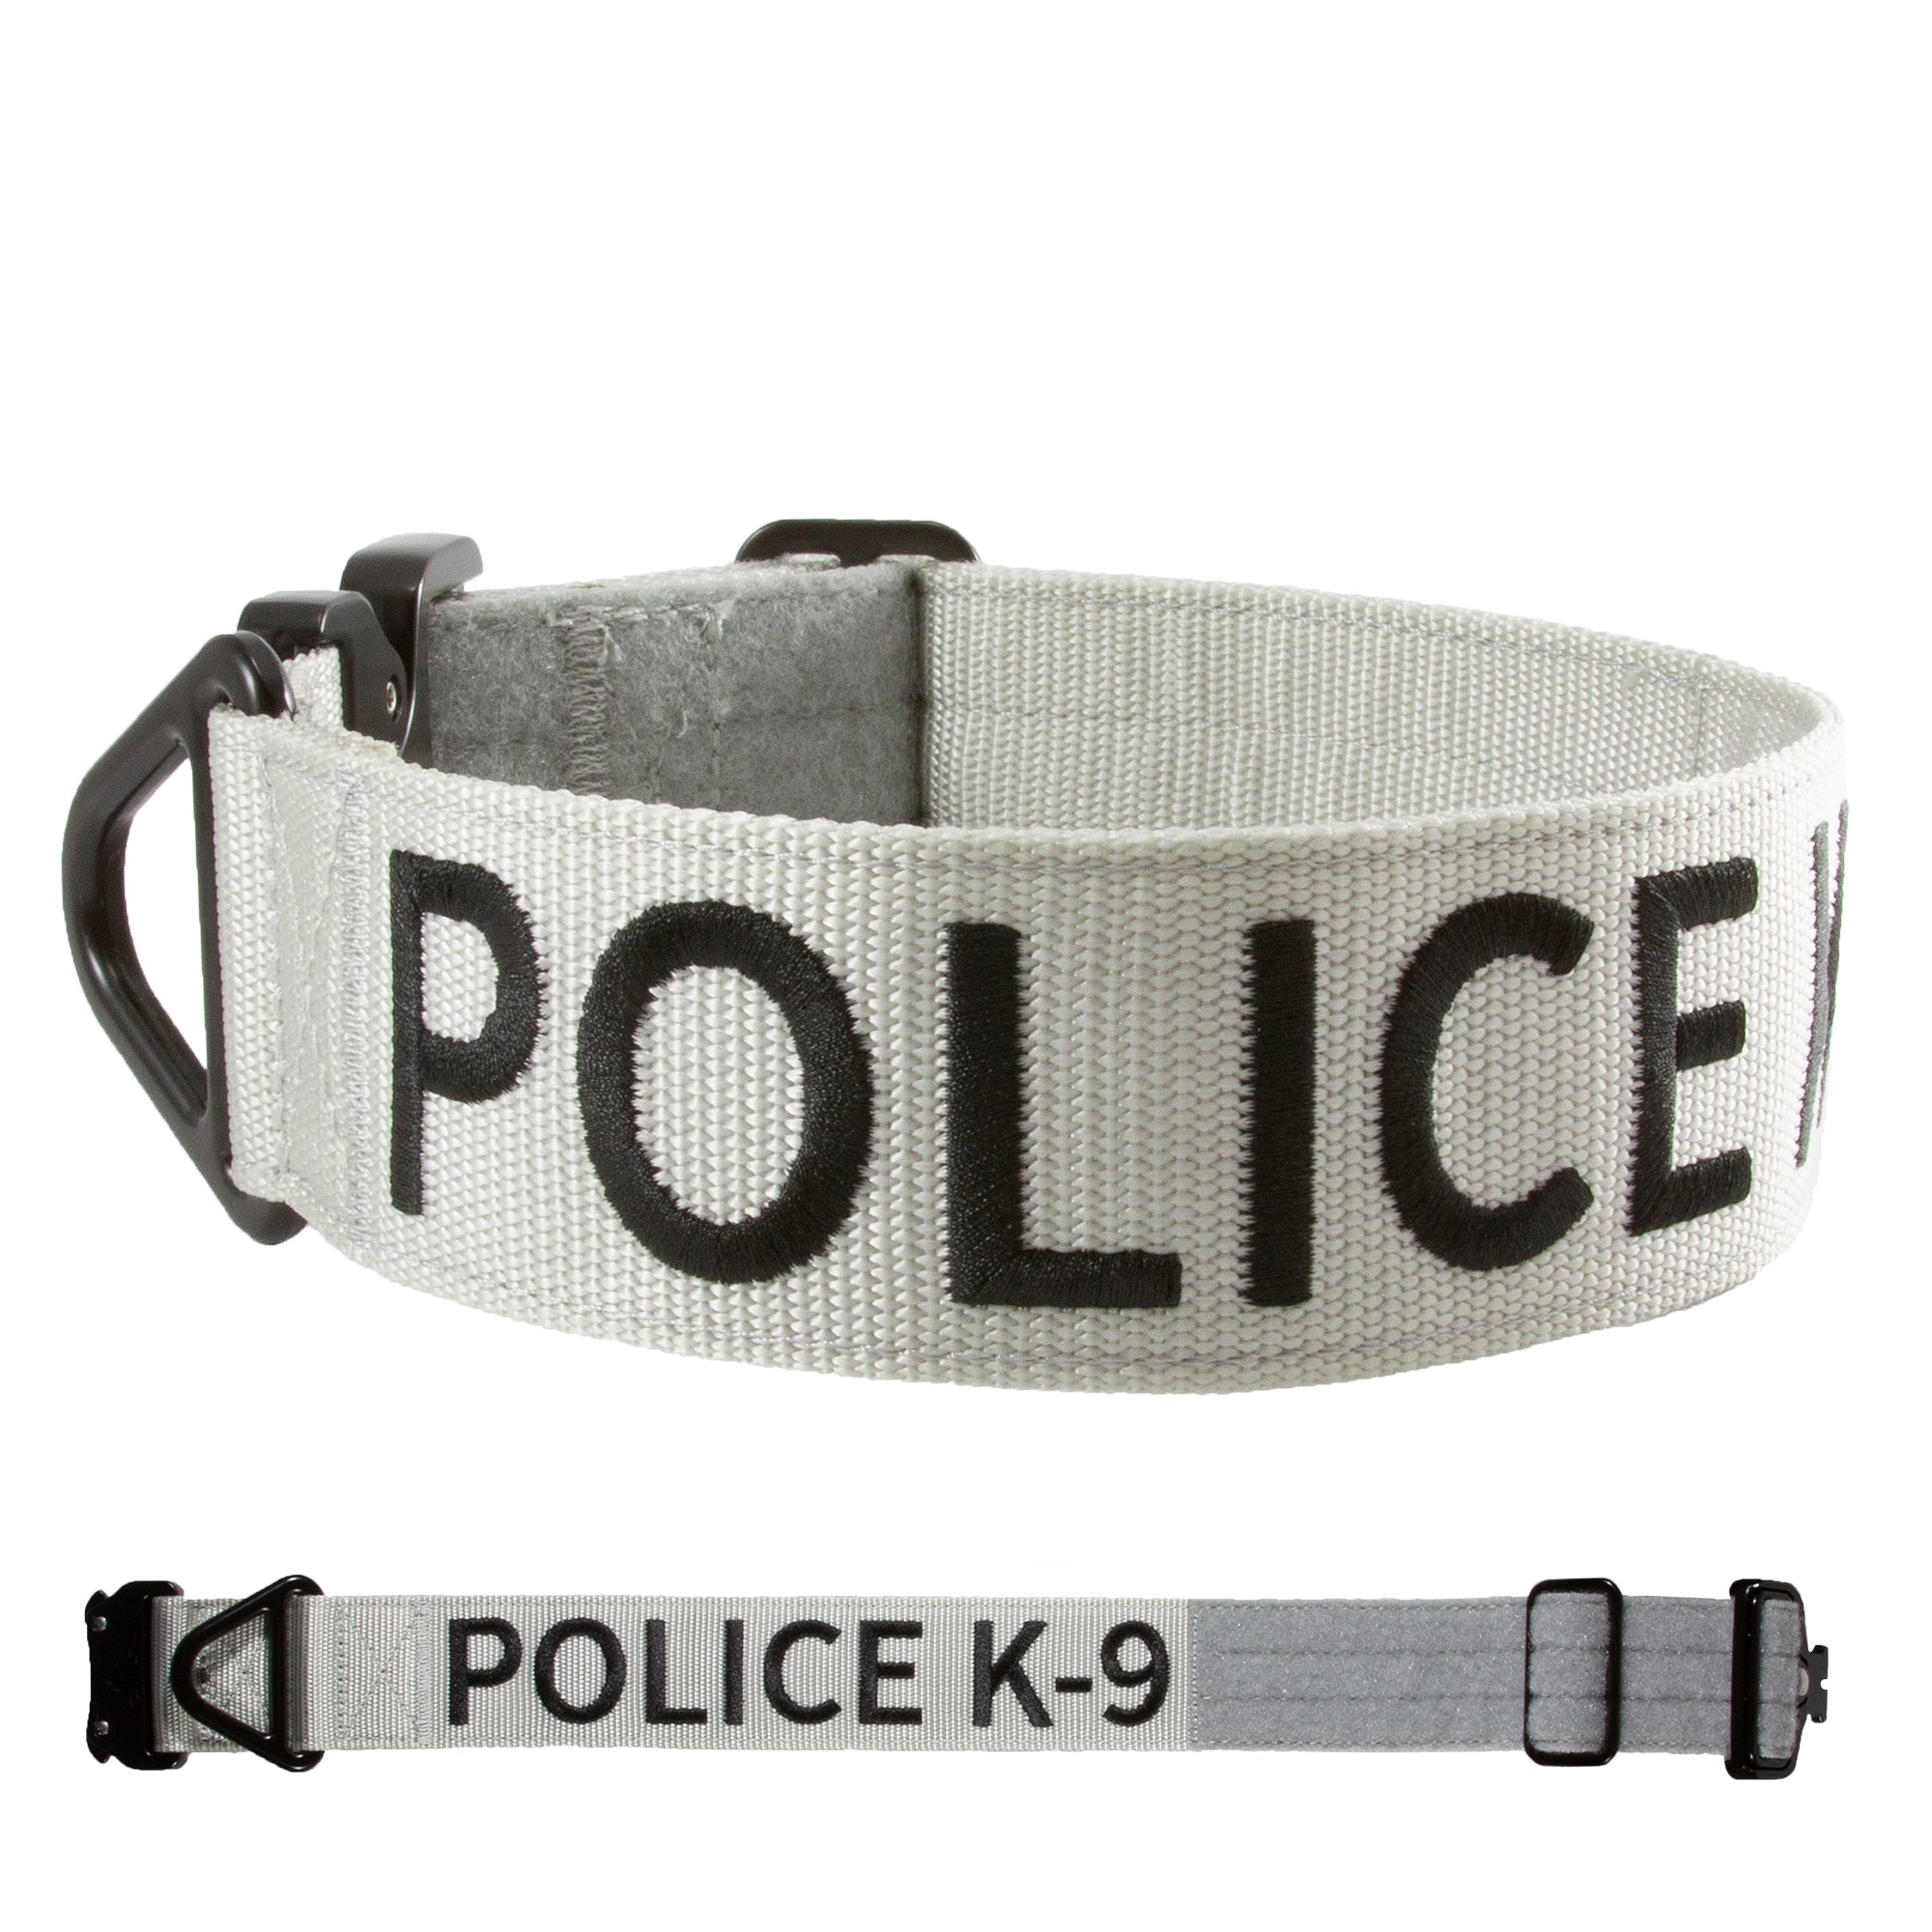 Police and Sheriff K-9 dog collars